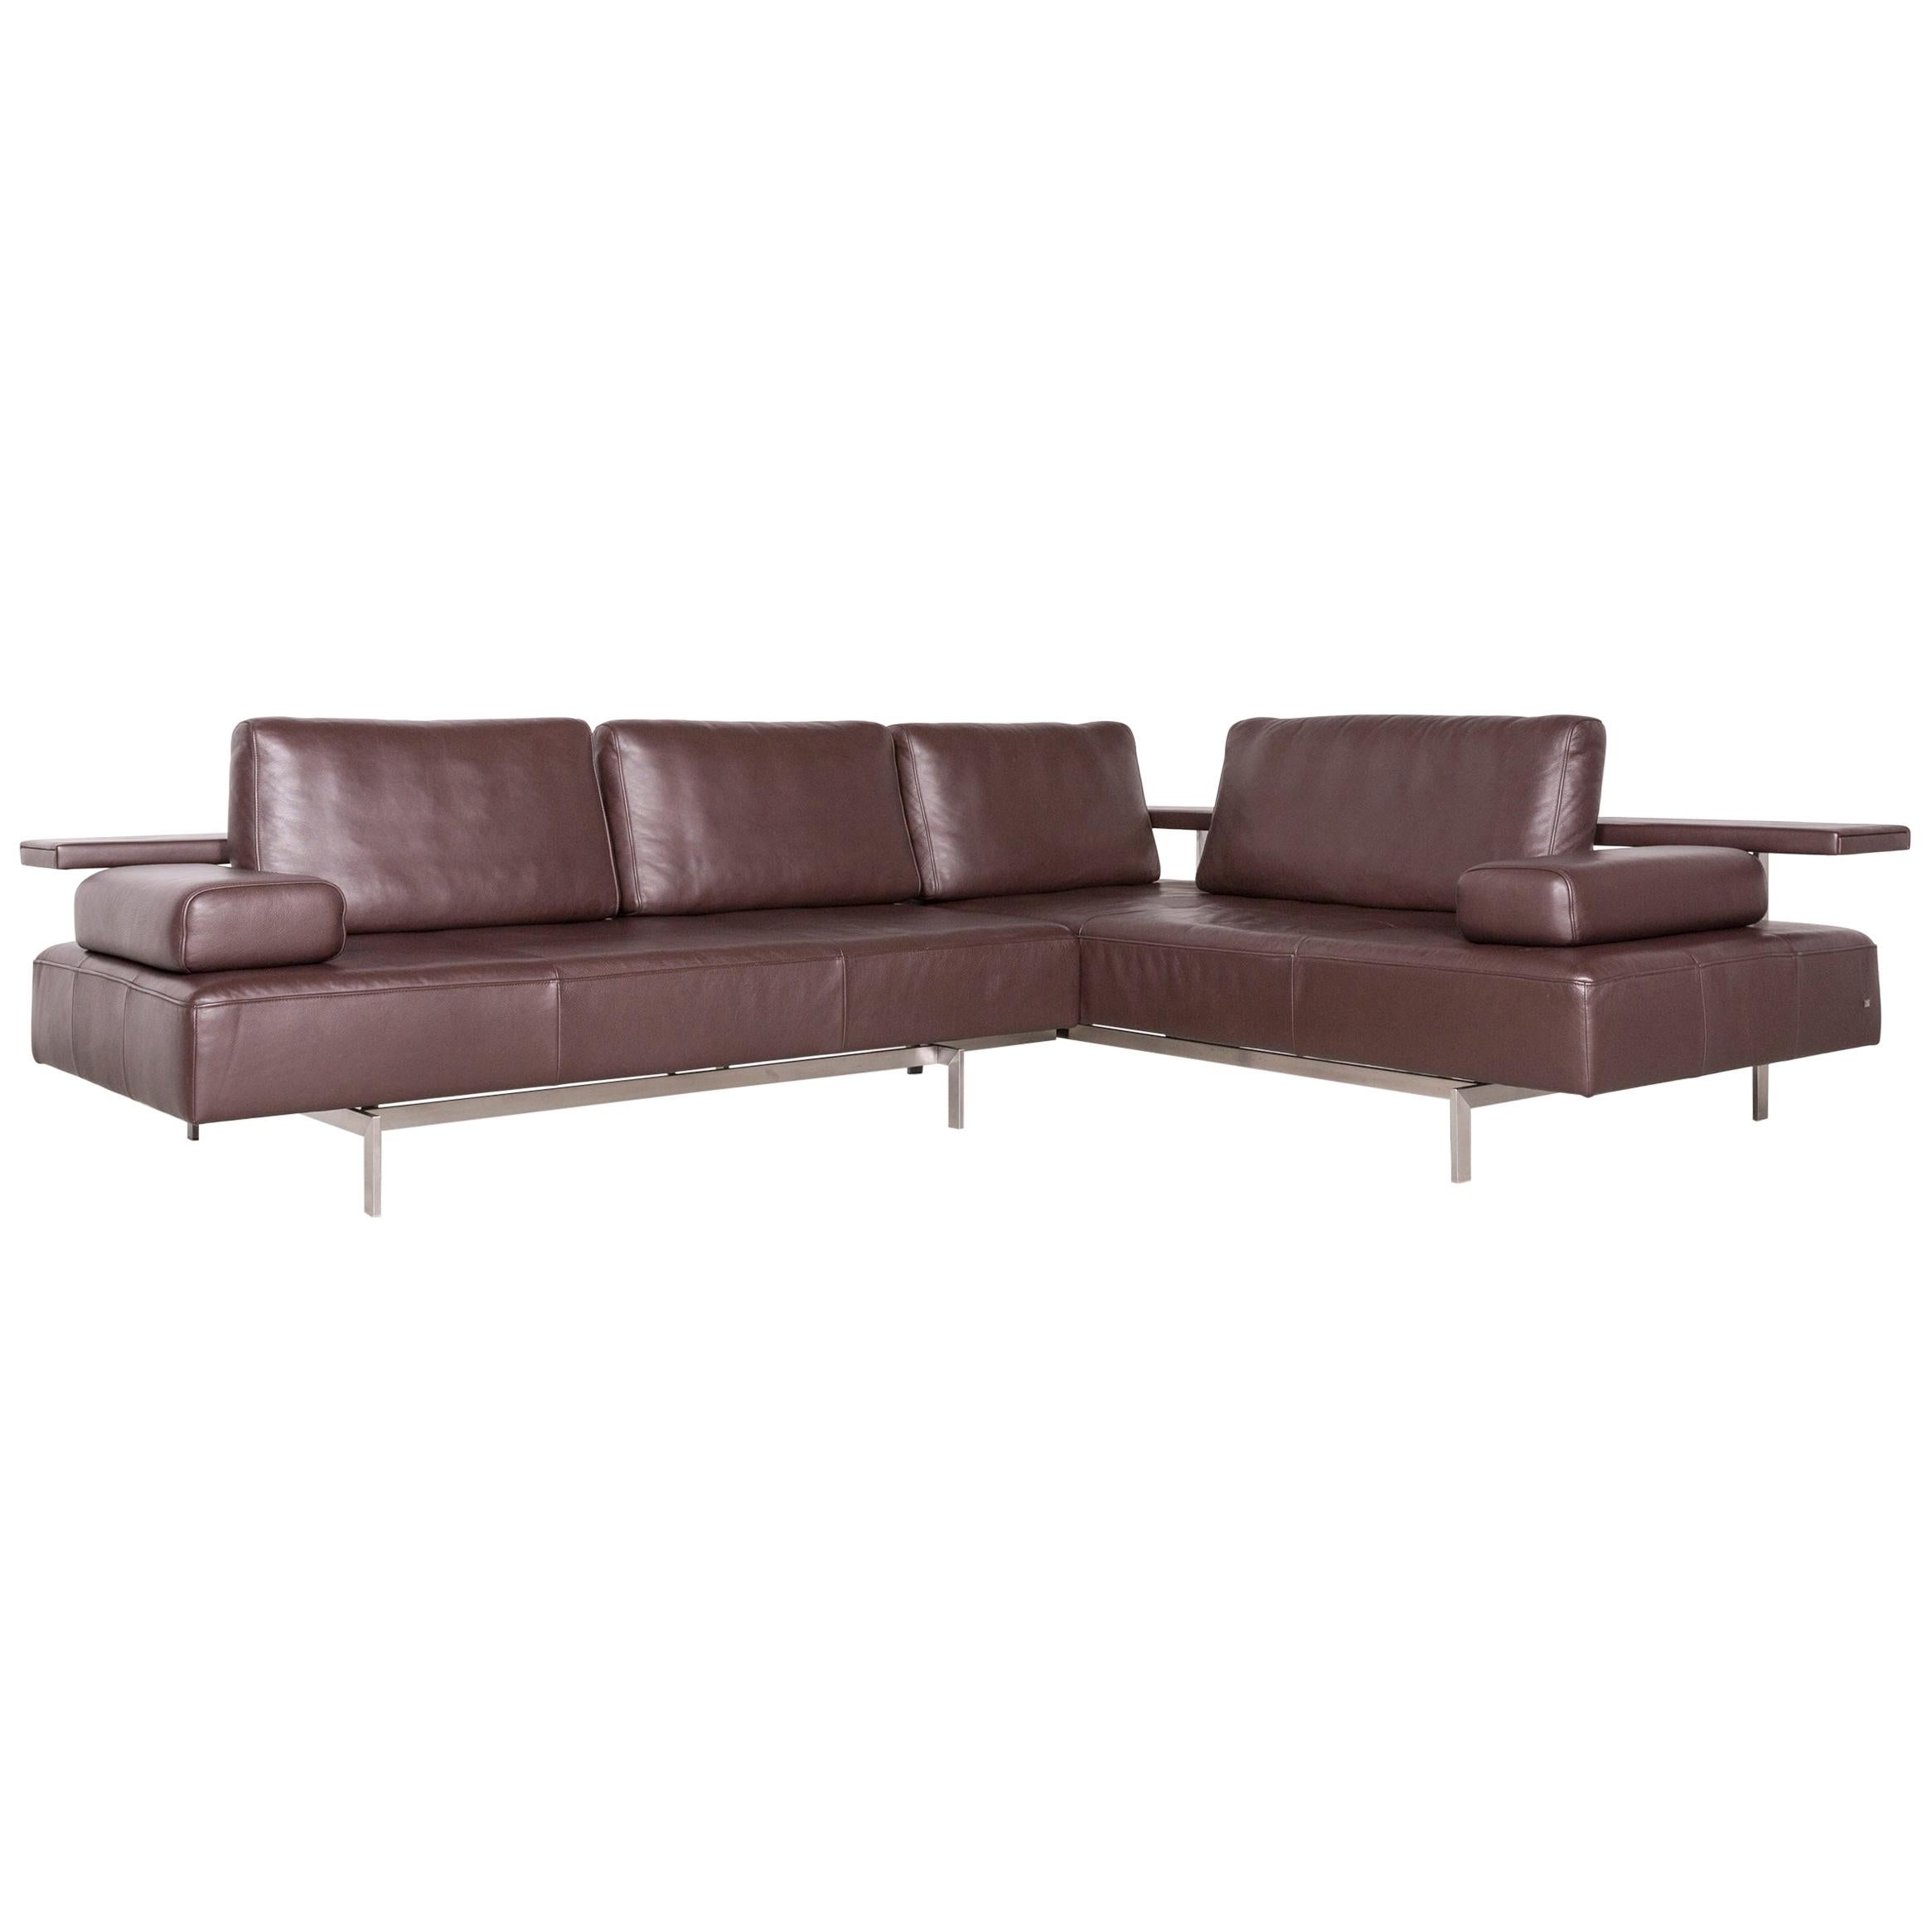 Rolf Benz Dono Designer Leather Corner Sofa Brown Genuine Leather Sofa Couch